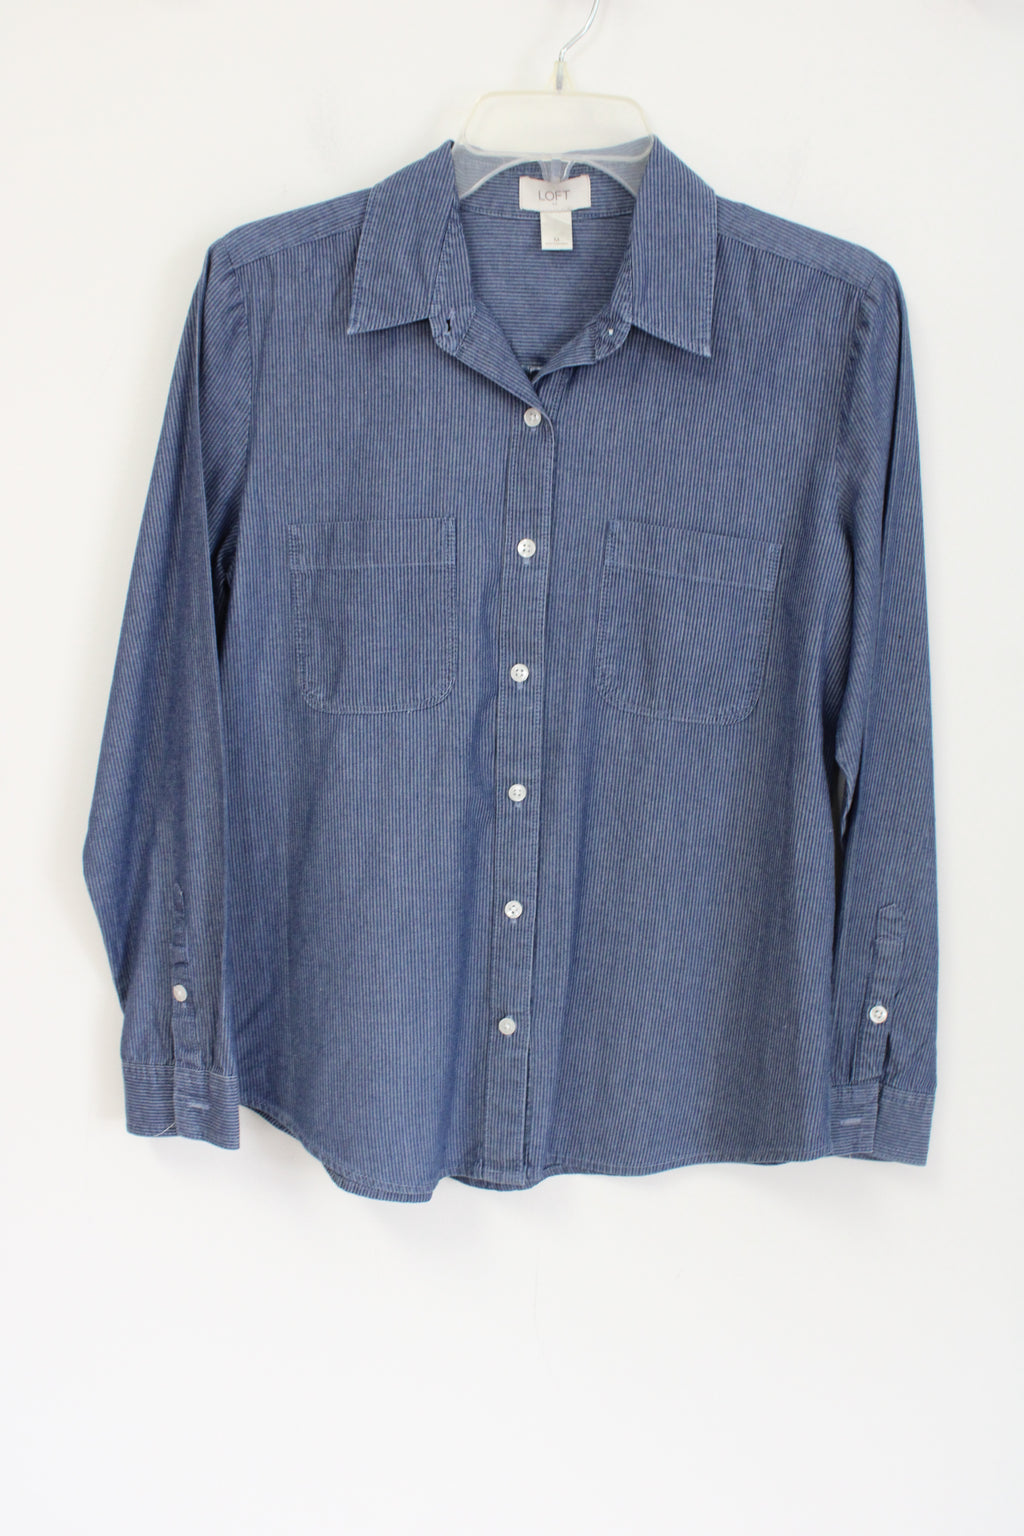 LOFT Blue Striped Cotton Button Down Shirt | M